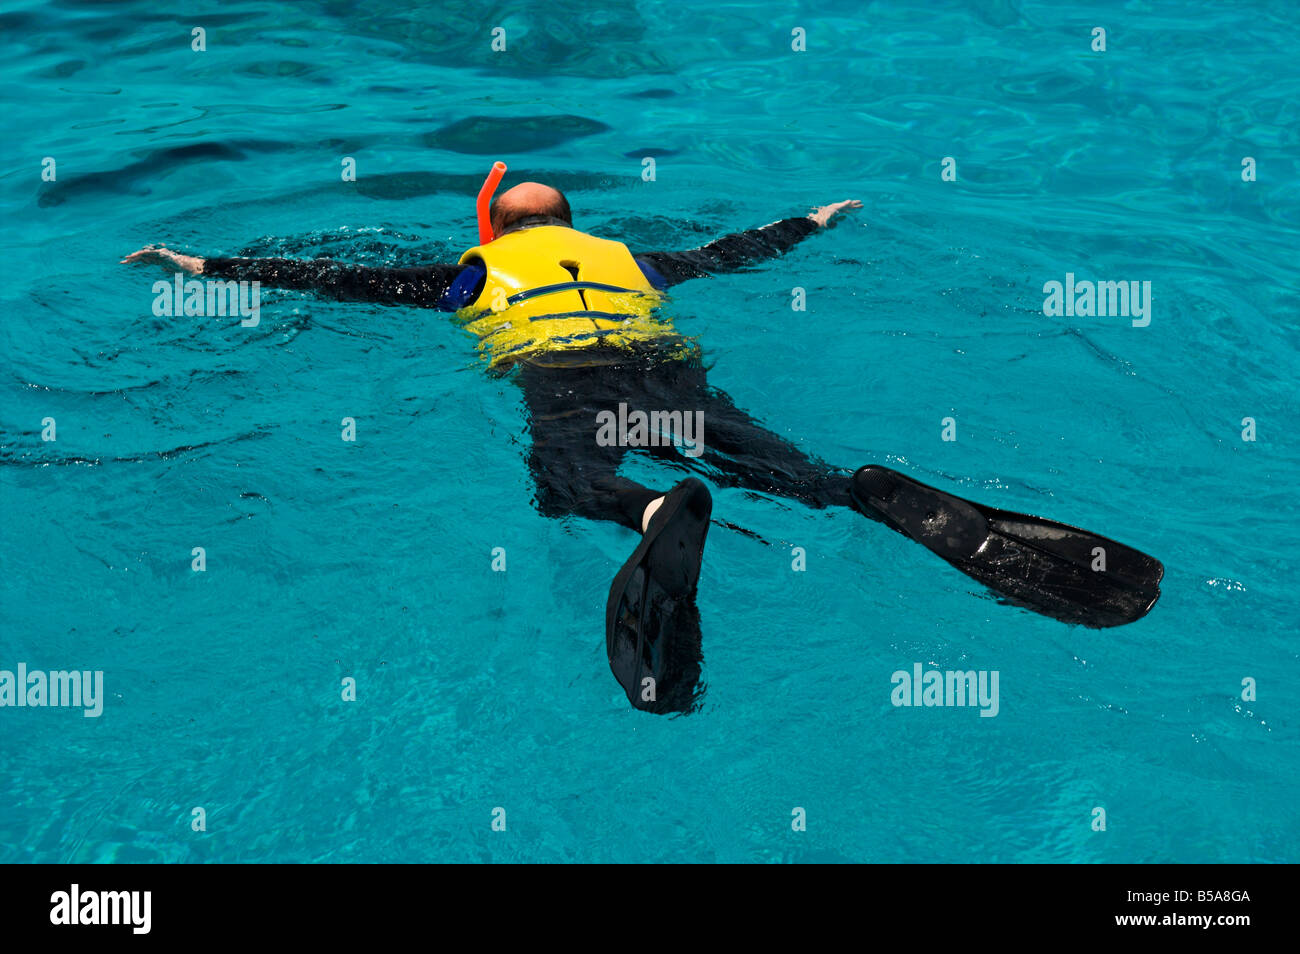 Man snorkeling in sea wearing life vest Bahamas Stock Photo